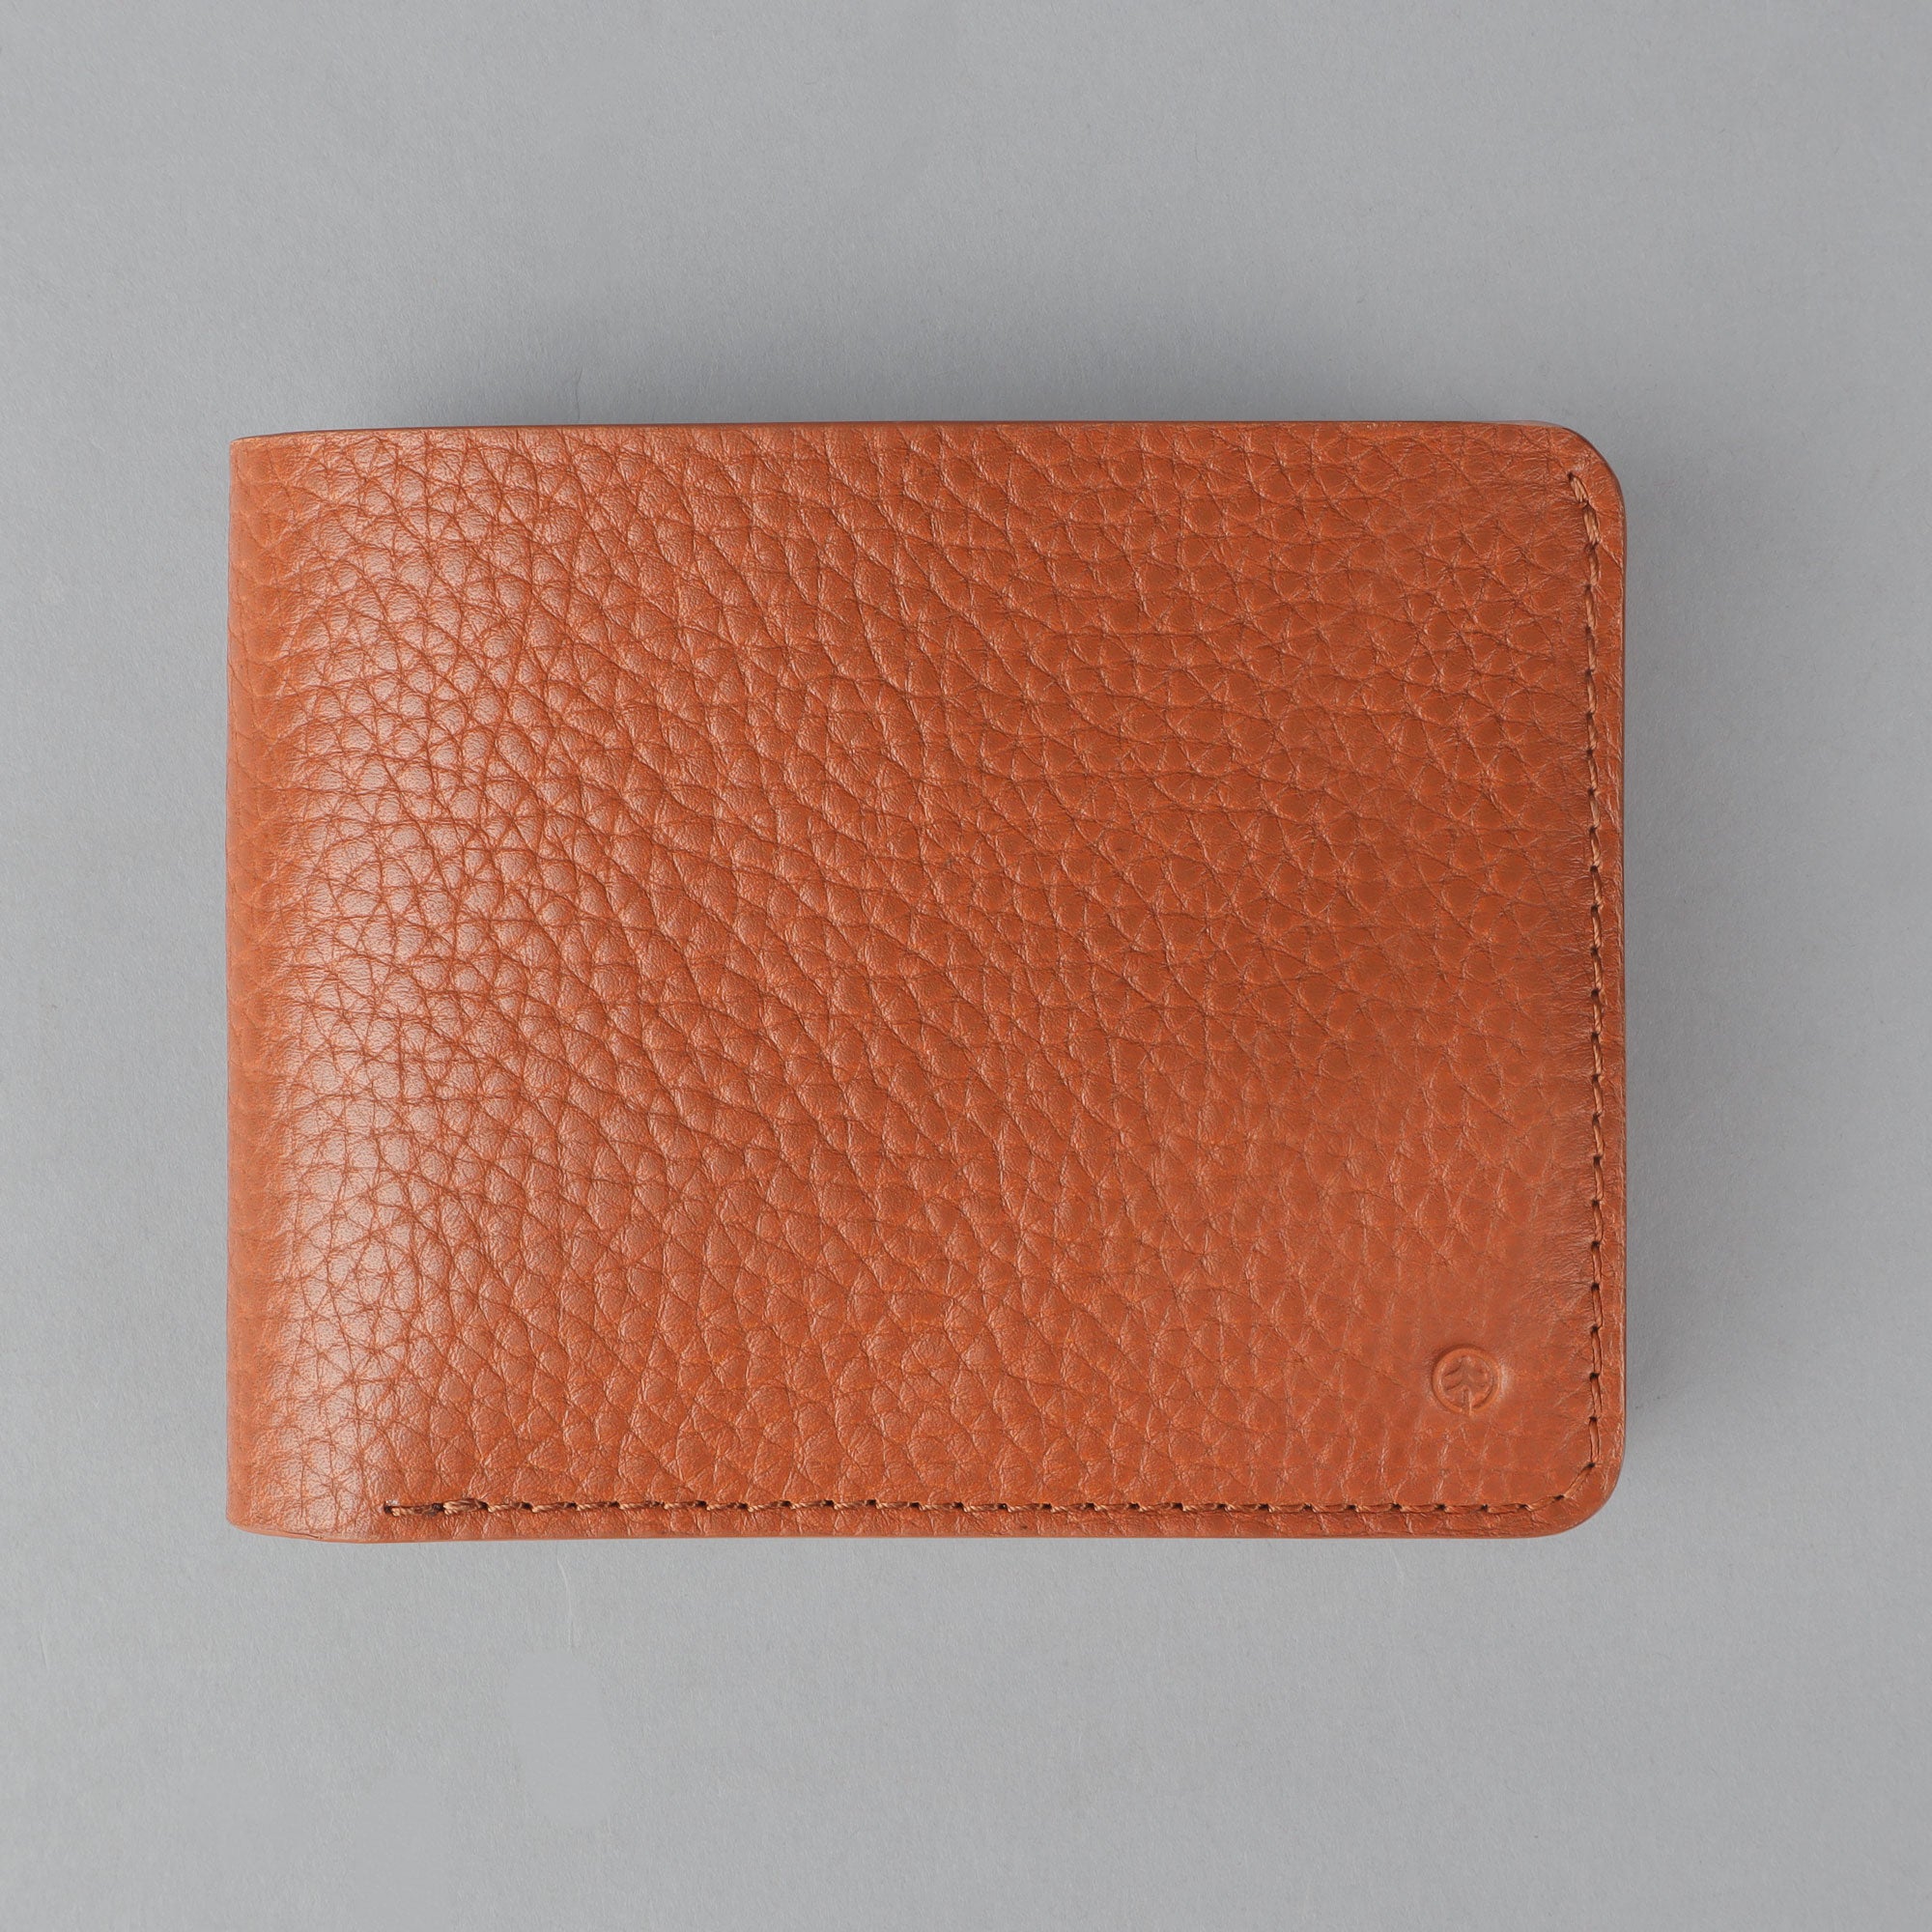 Tan leather bi-fold wallet for men